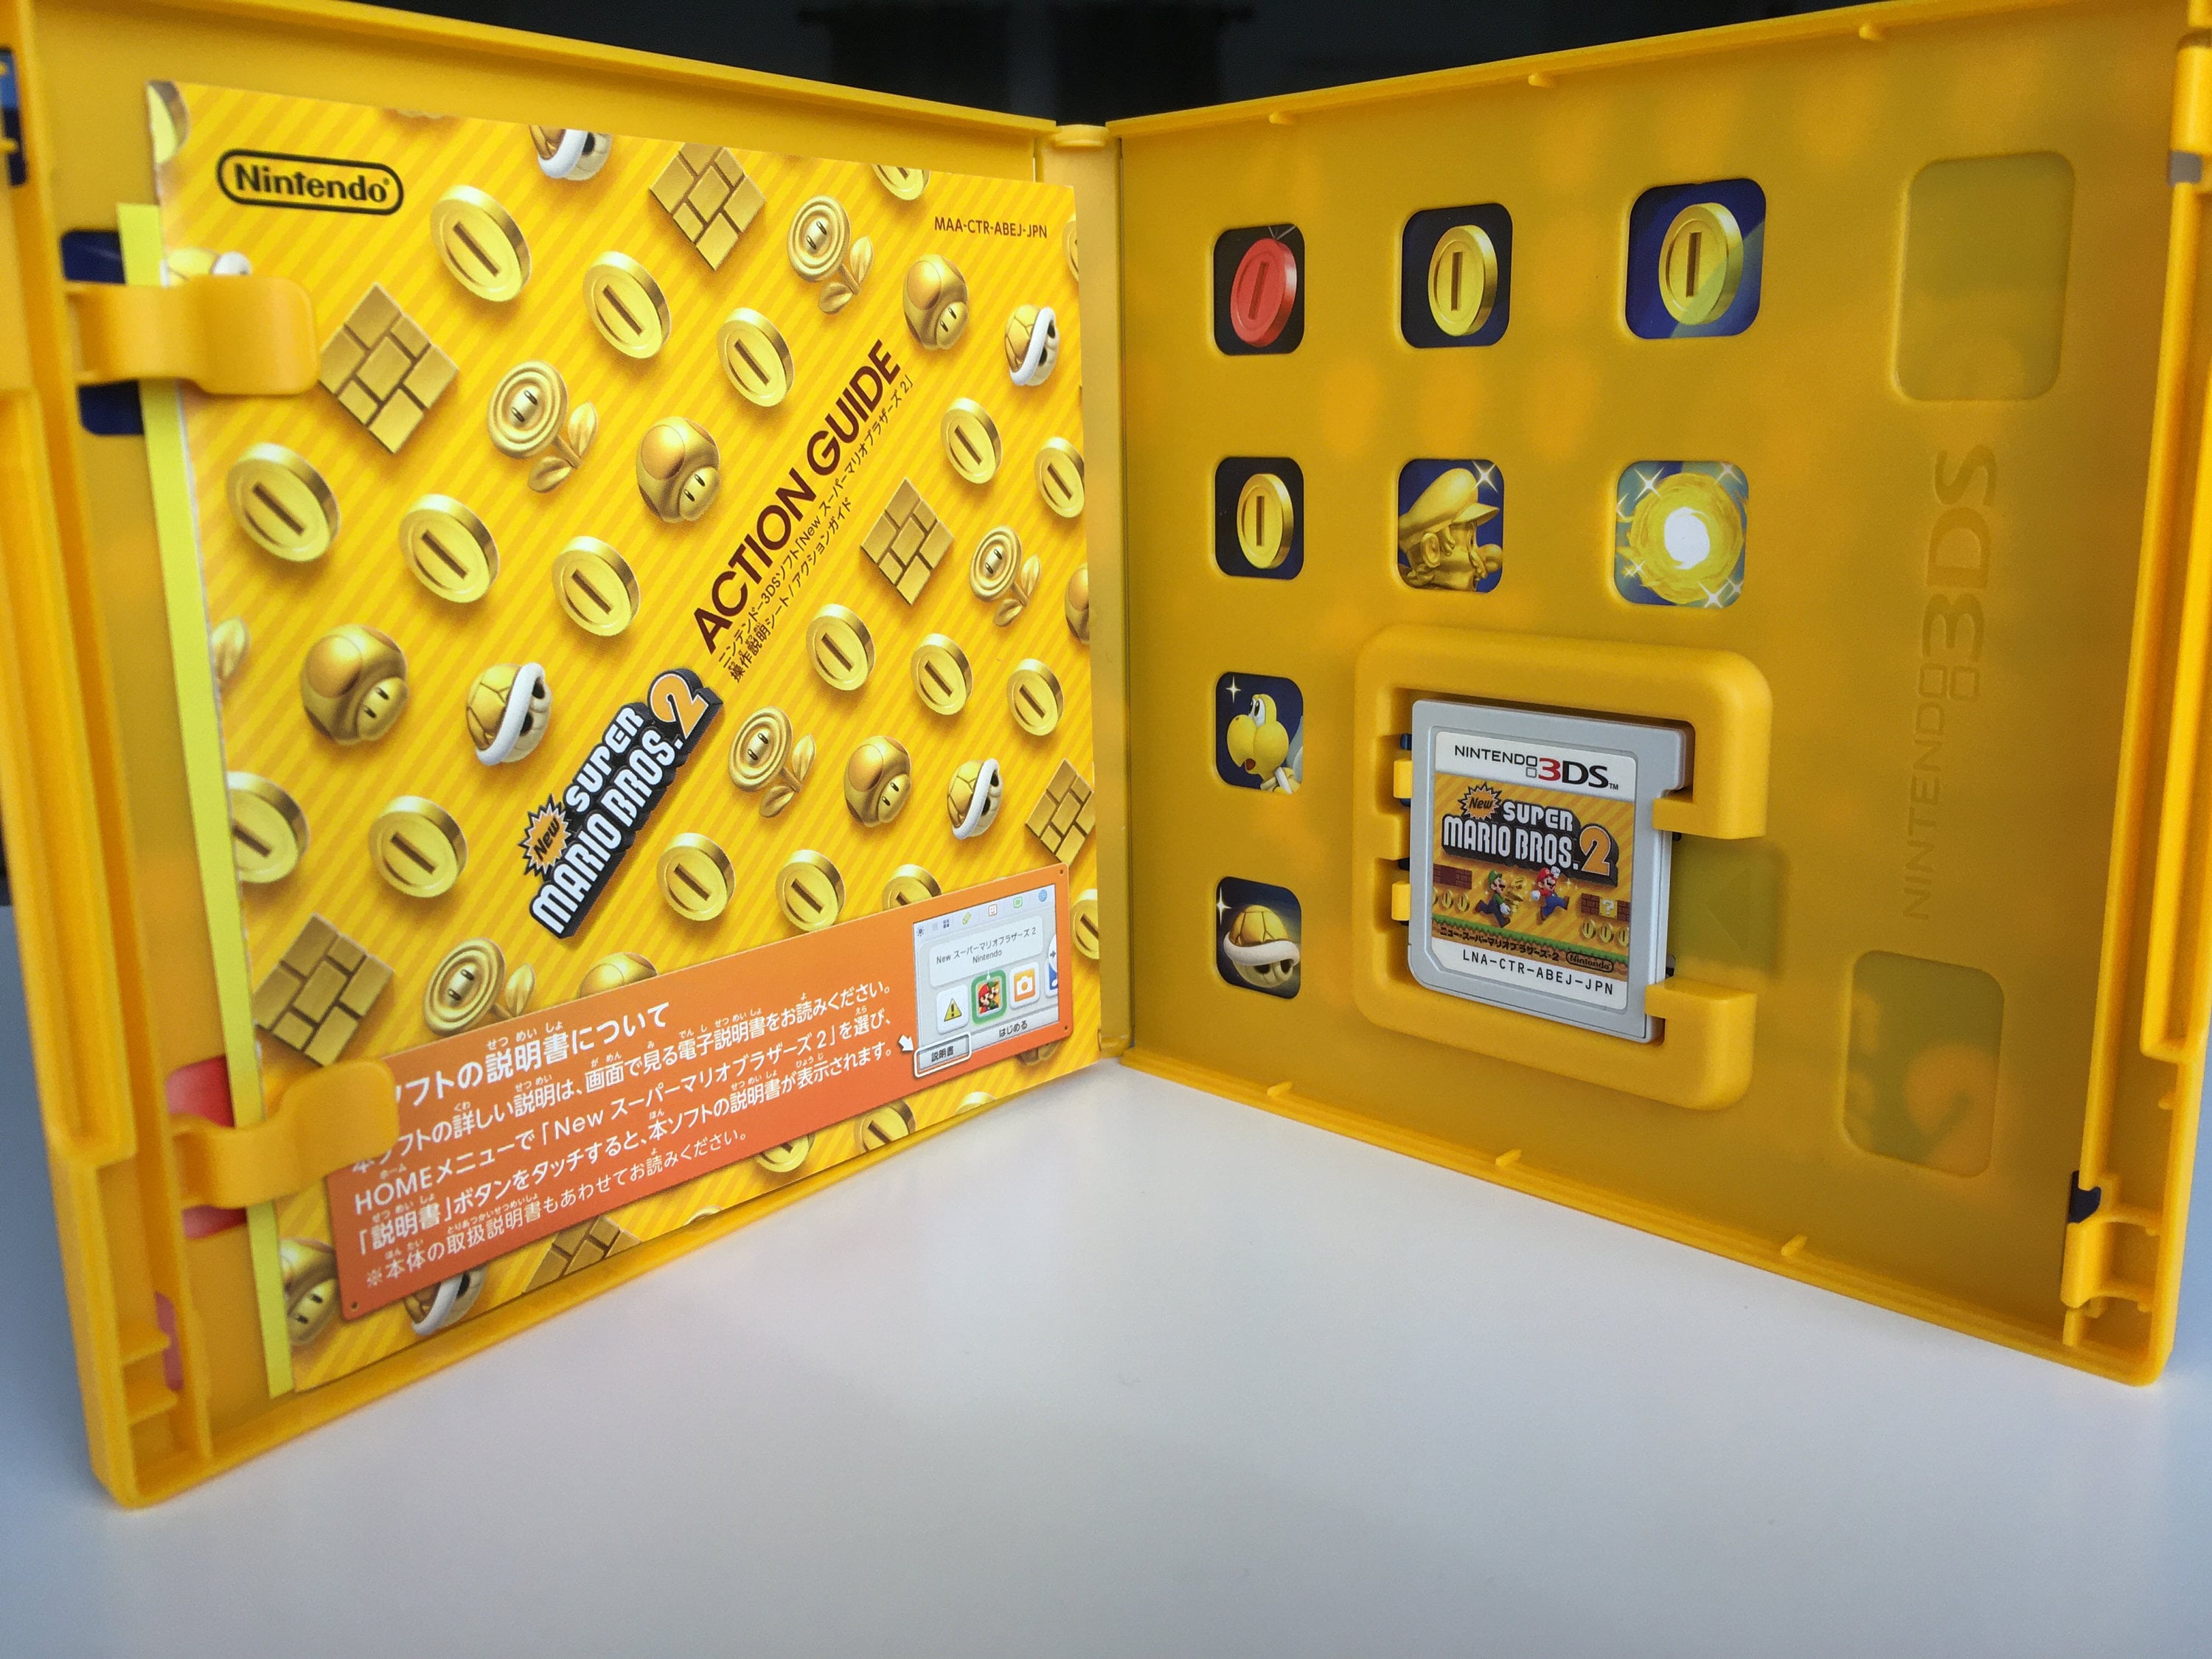 3DS New Super Mario Bros. 2 Japanese Version CTR-P-ABEJ 2012 Japan Import  U.S. Seller - Etsy